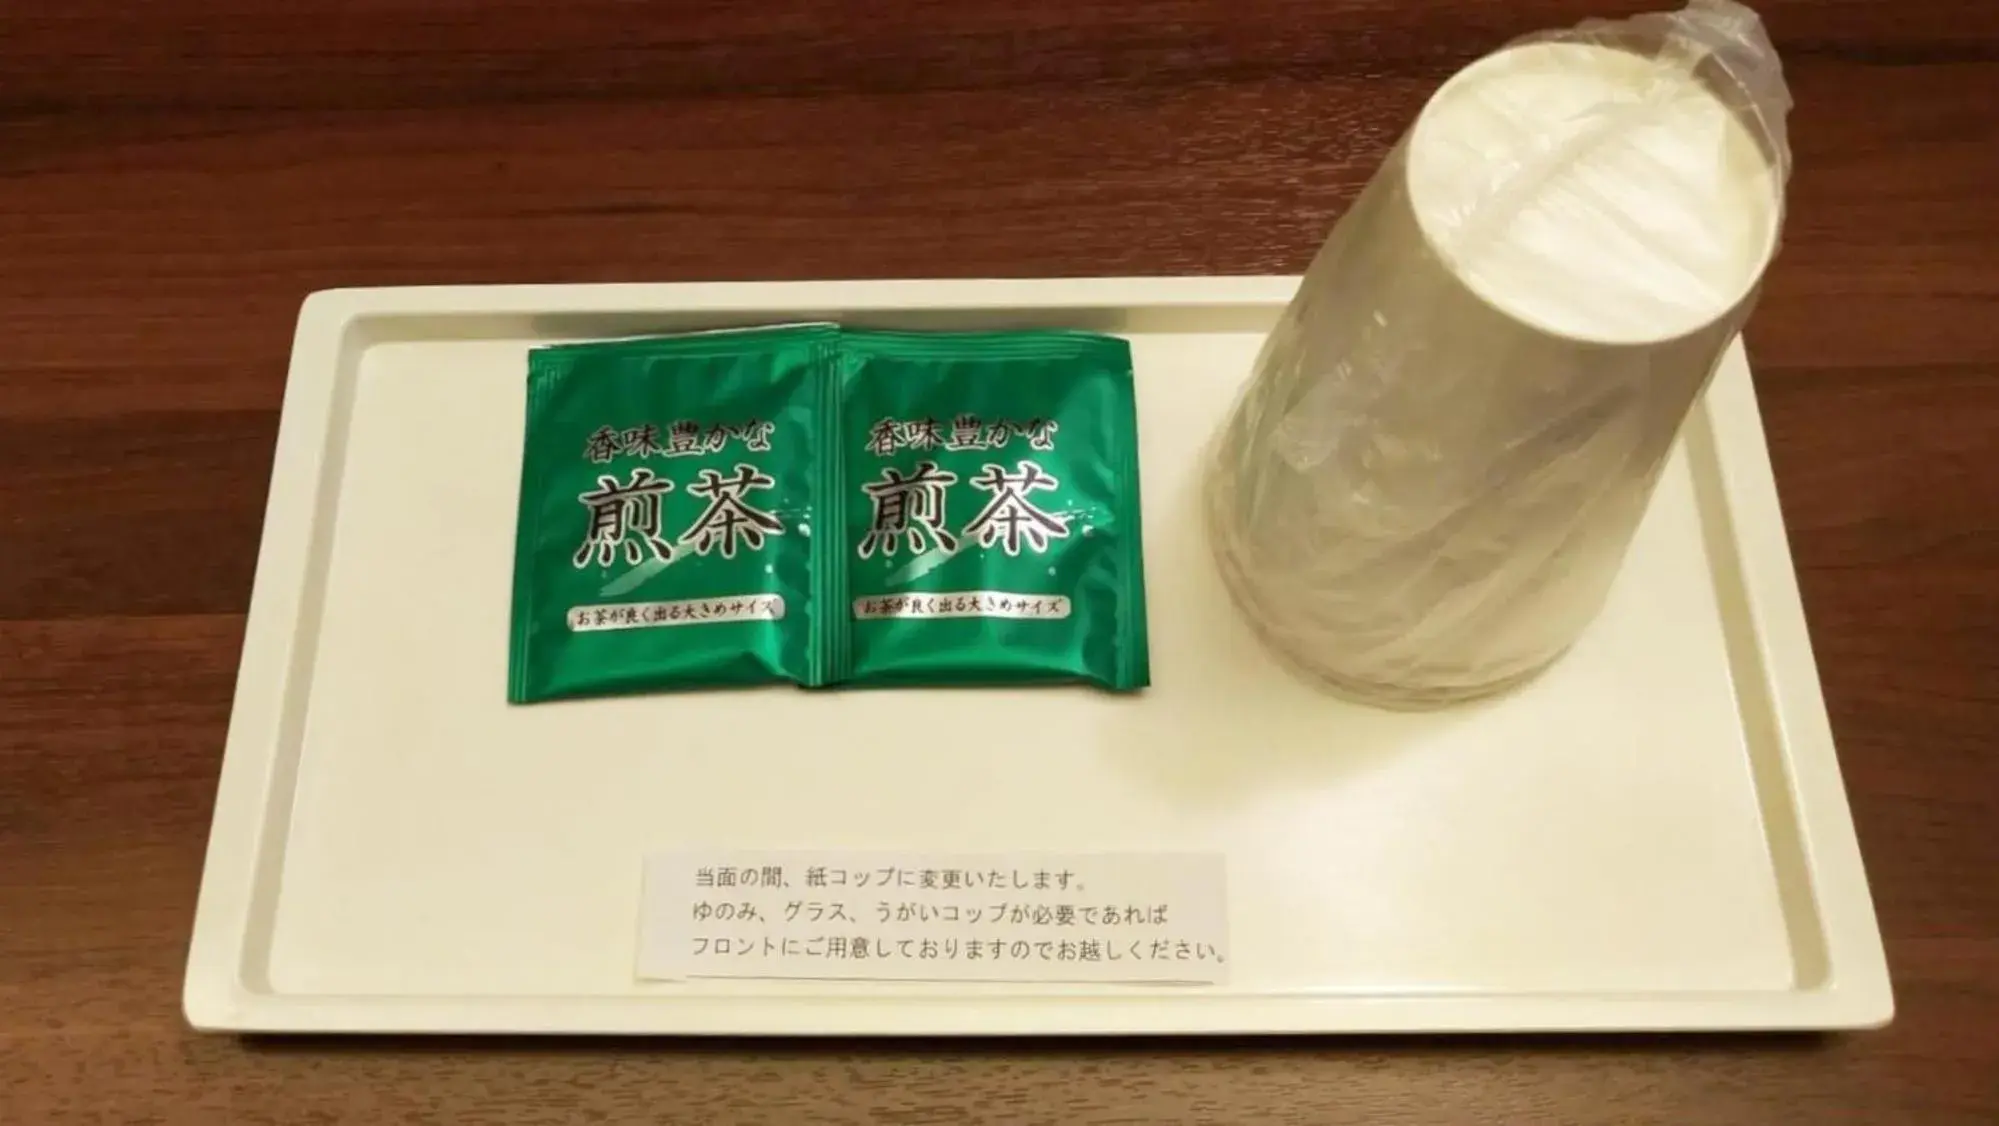 Drinks in Tokai City Hotel